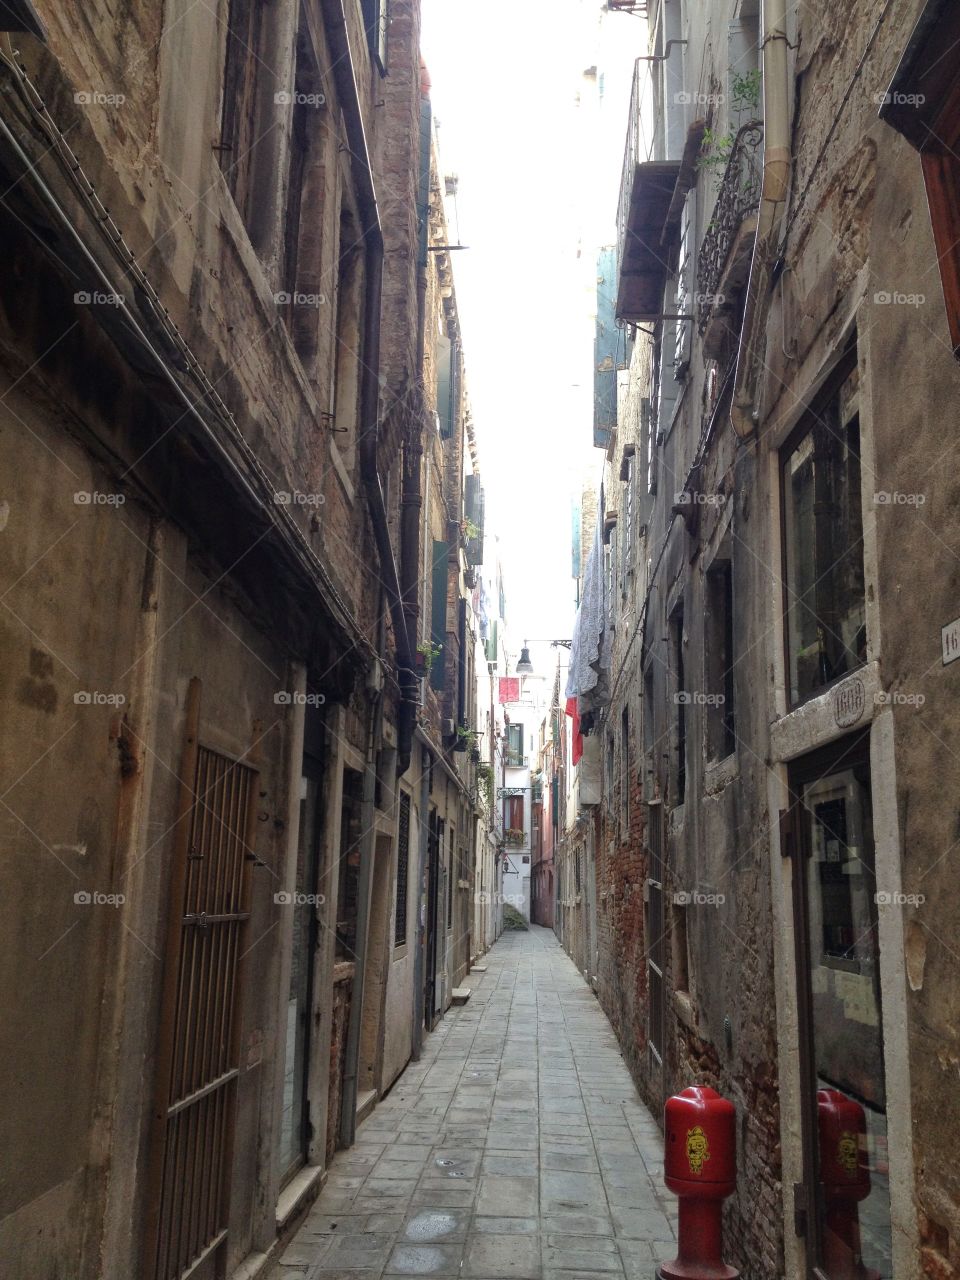 One street in Venice 